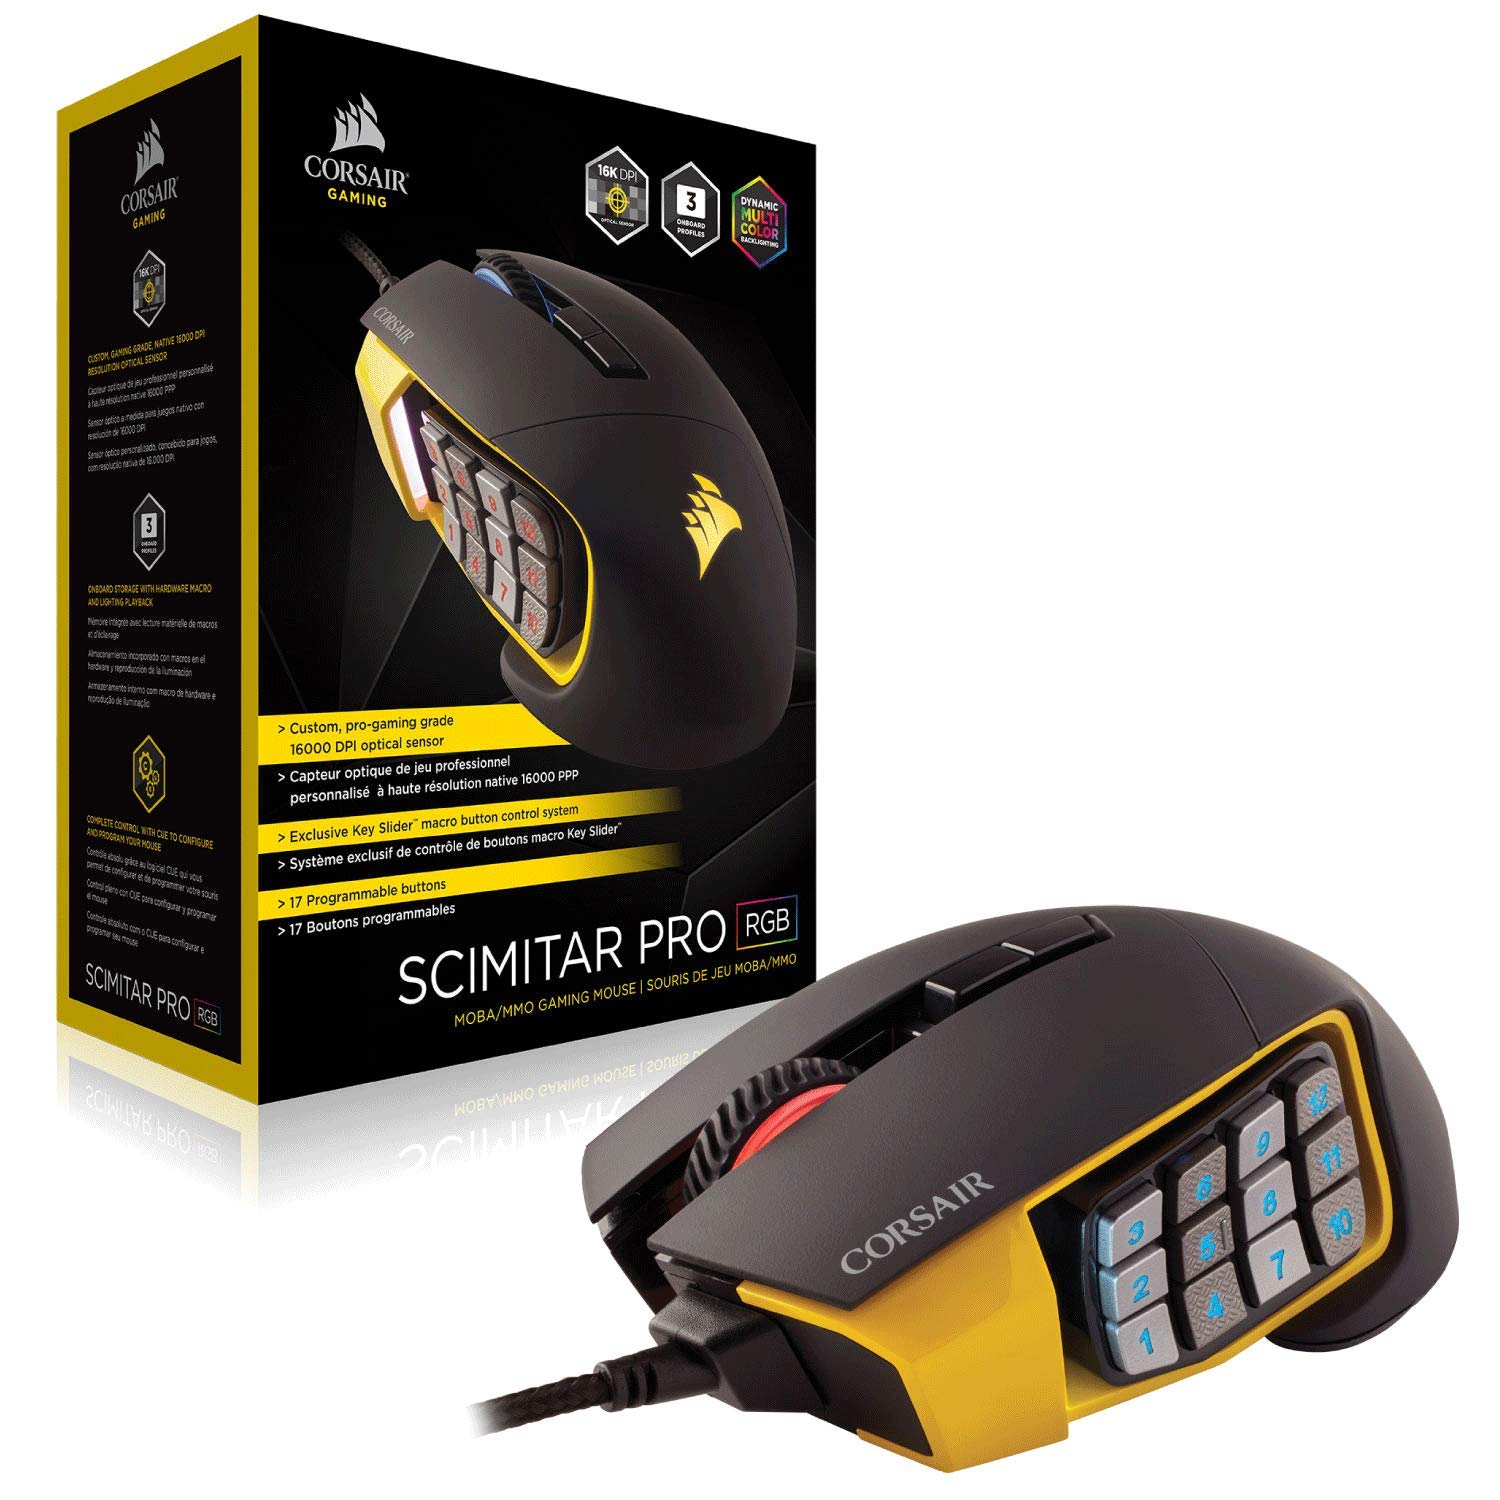 12 Programmable Side Buttons CORSAIR Scimitar Pro RGB Yellow 16,000 DPI Optical Sensor MMO Gaming Mouse 